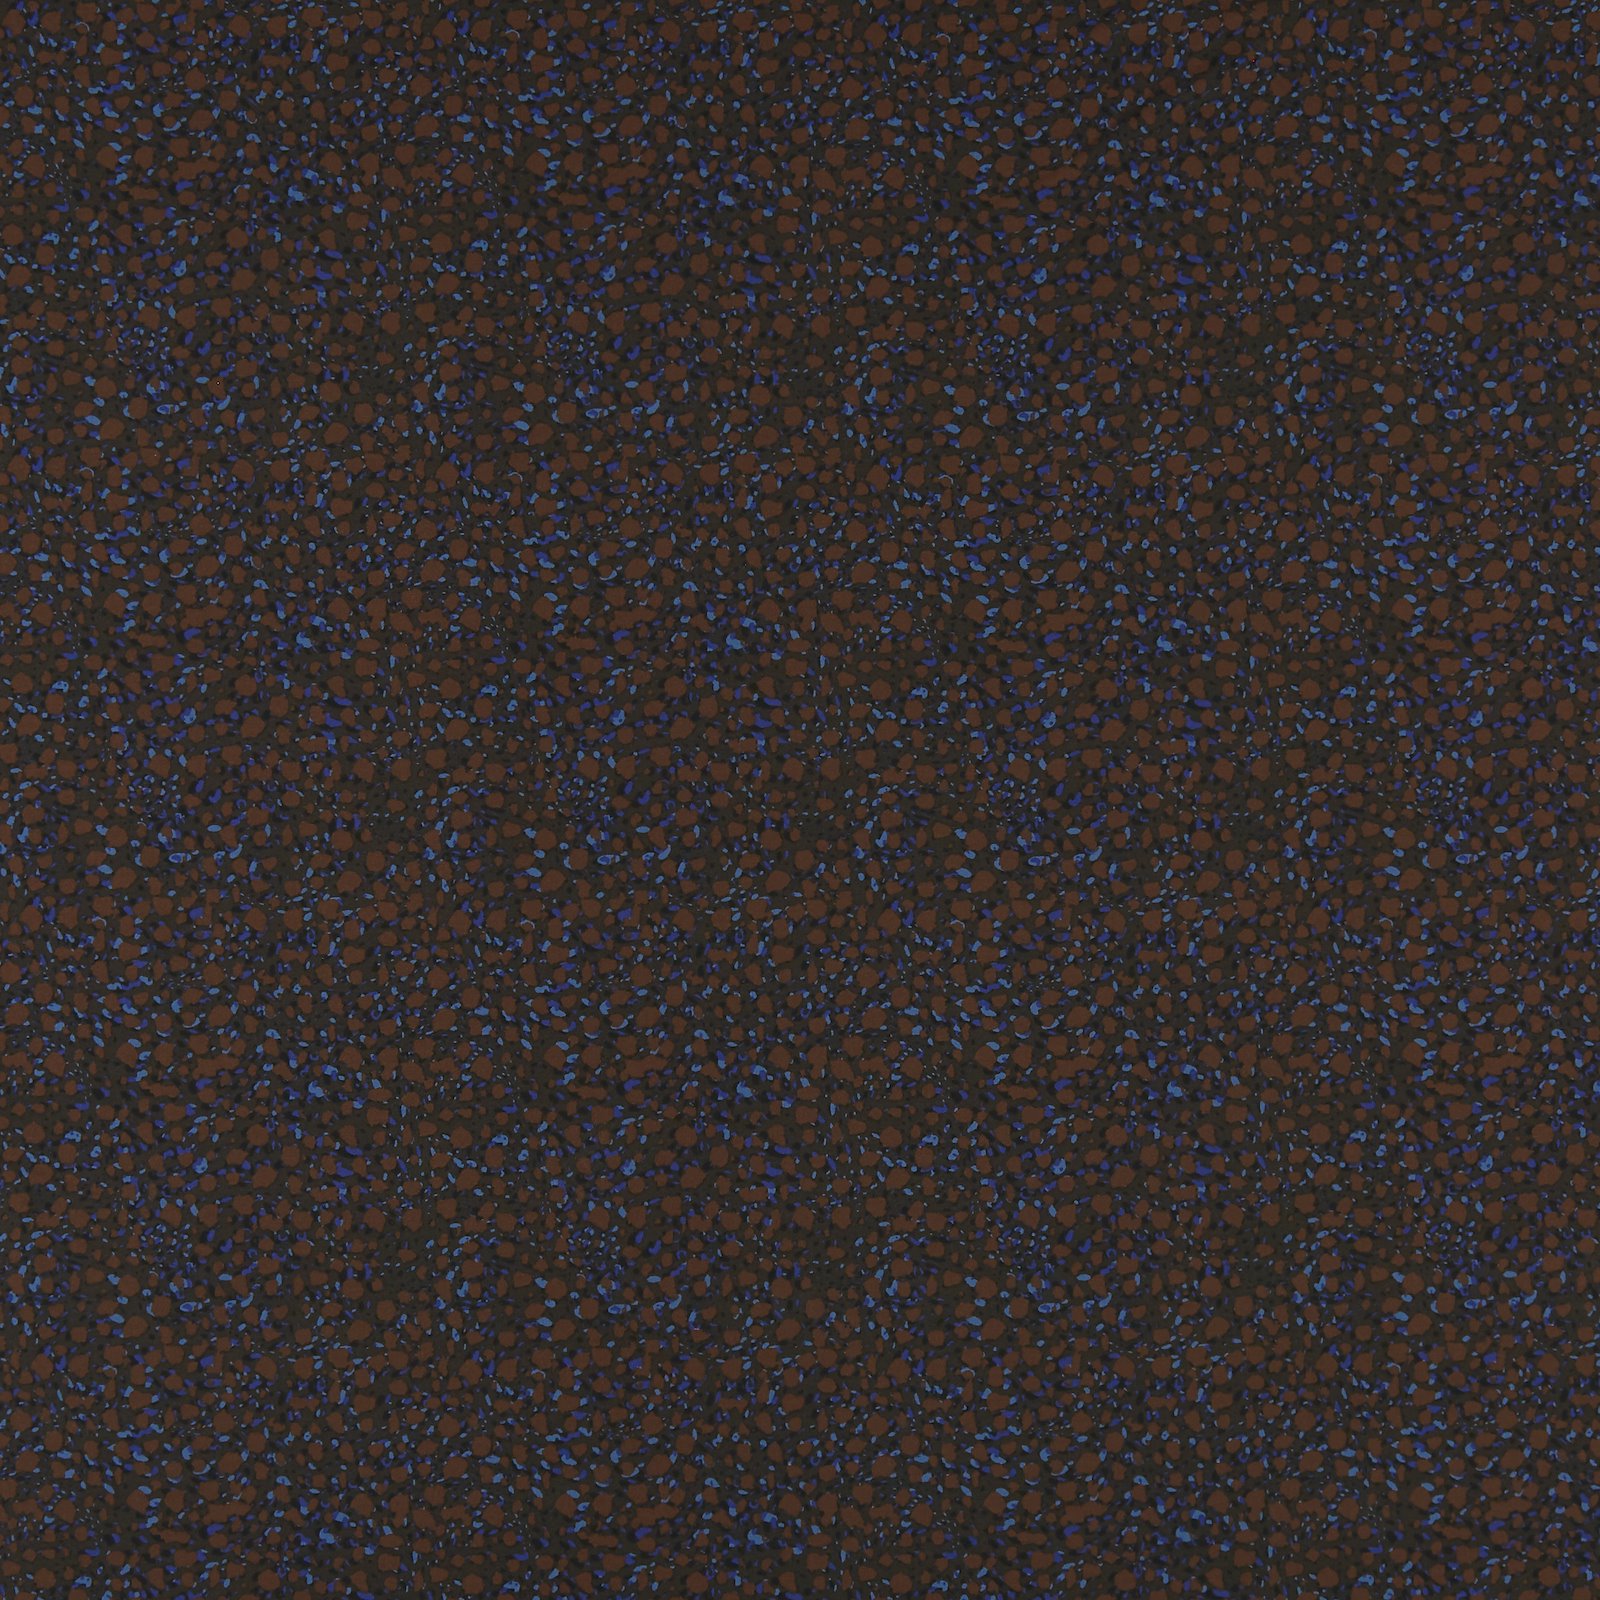 BCI str jersey dark brown w uneven dots 273166_pack_sp